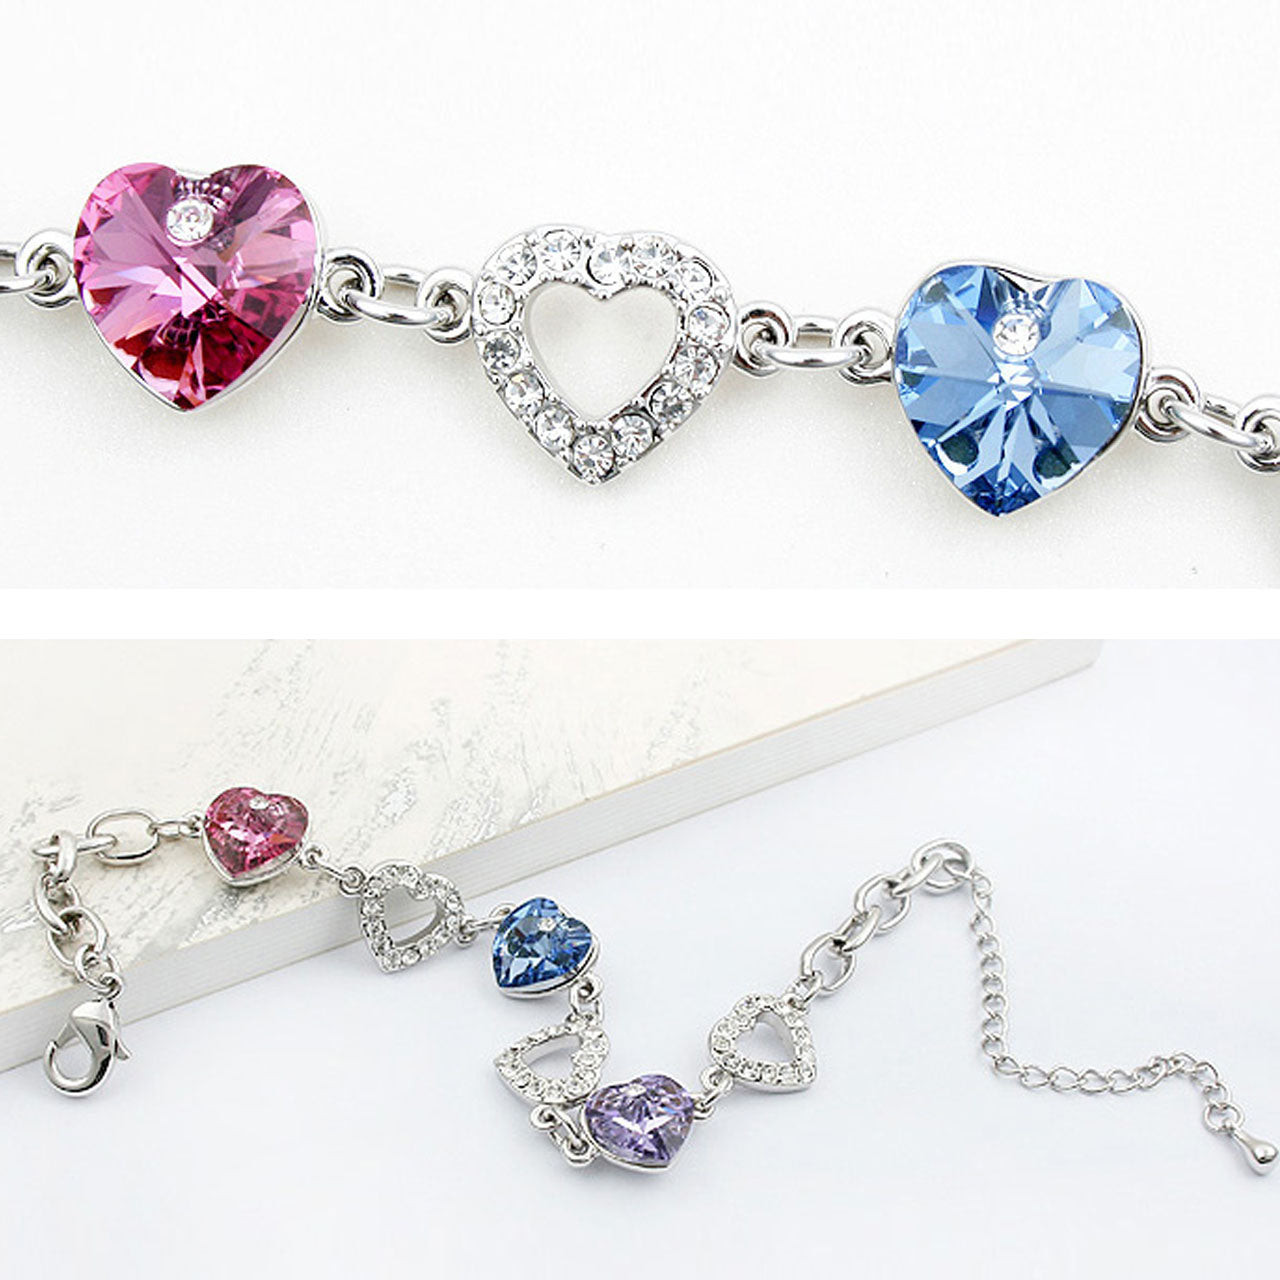 Colorful Hearts Bracelet w/ Swarovski Crystals | Rhodium Plated | Dahlia